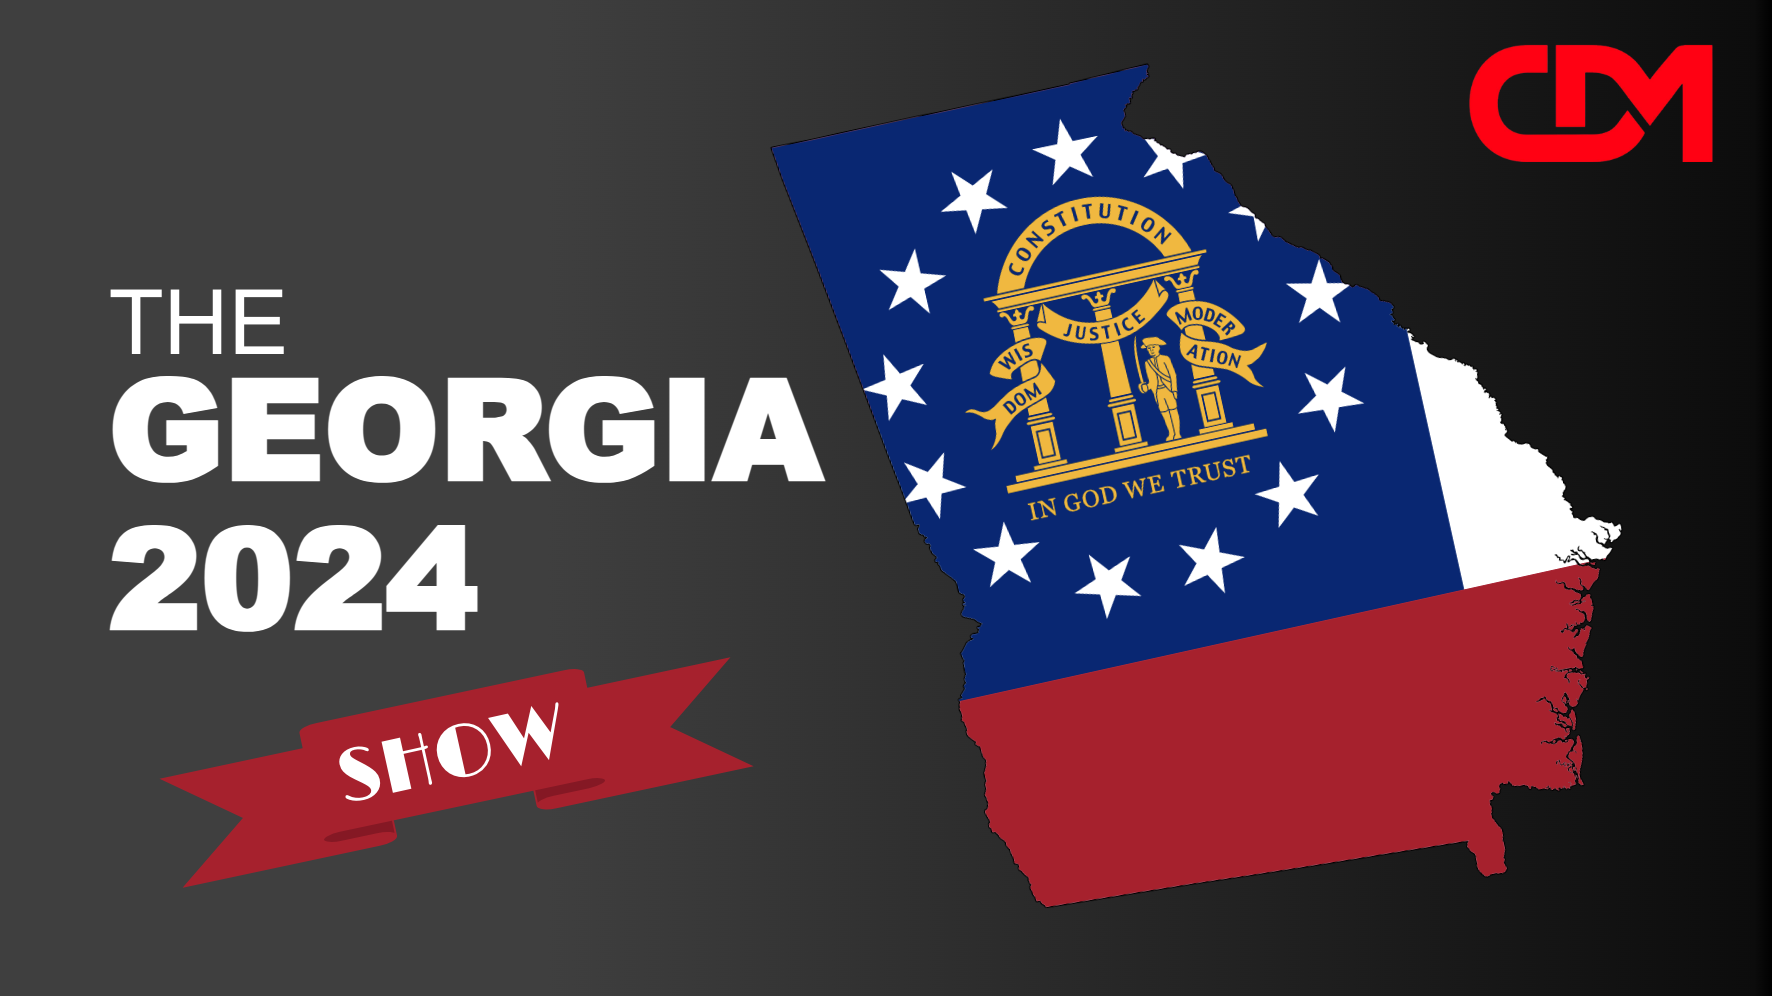 LIVE 2pm EST: The Georgia 2024 Show! With Mallory Staples, Chris Gleason, Garland Favorito